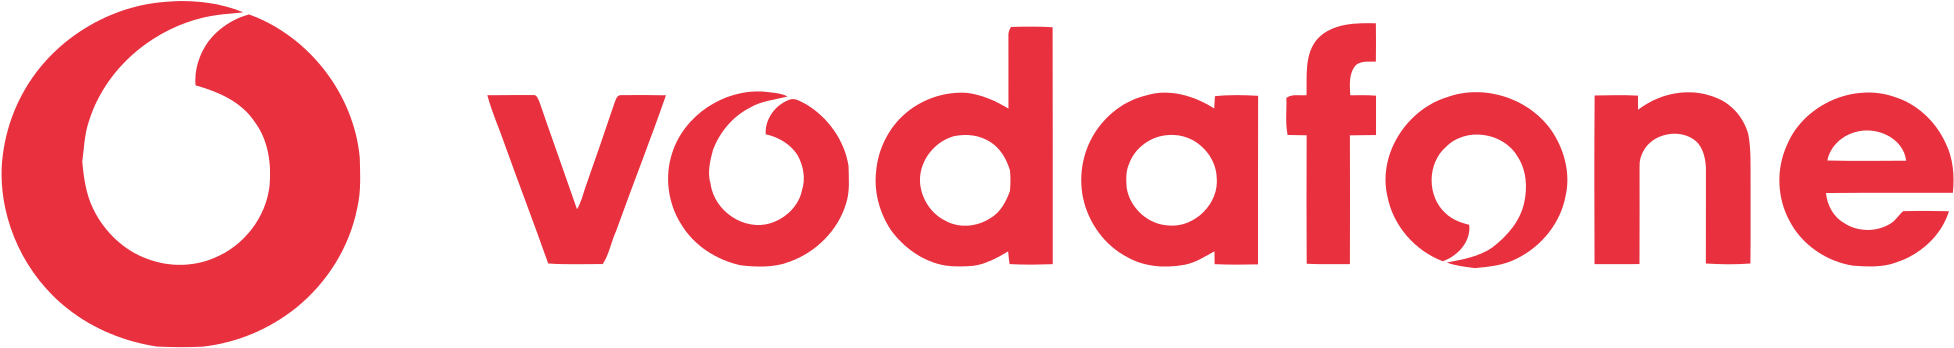 Vodafone Logo Red Background